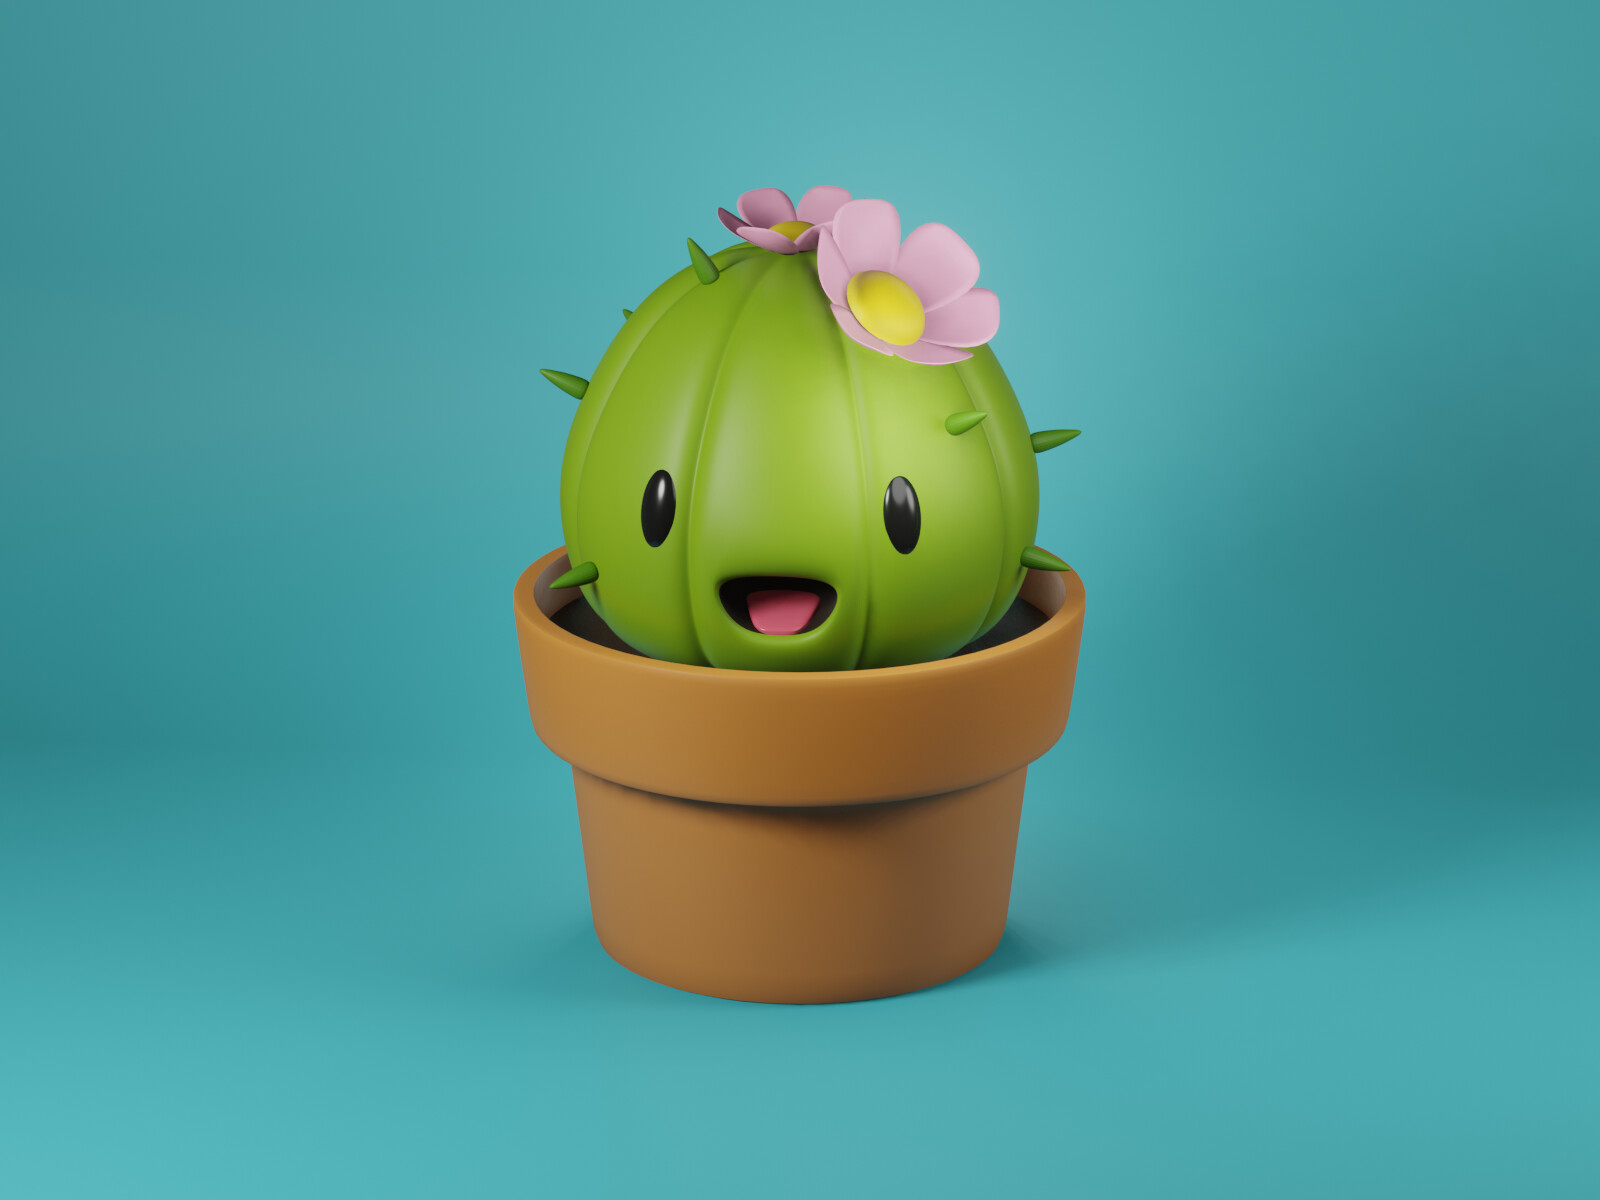 ArtStation - 3D Character Little Cactus